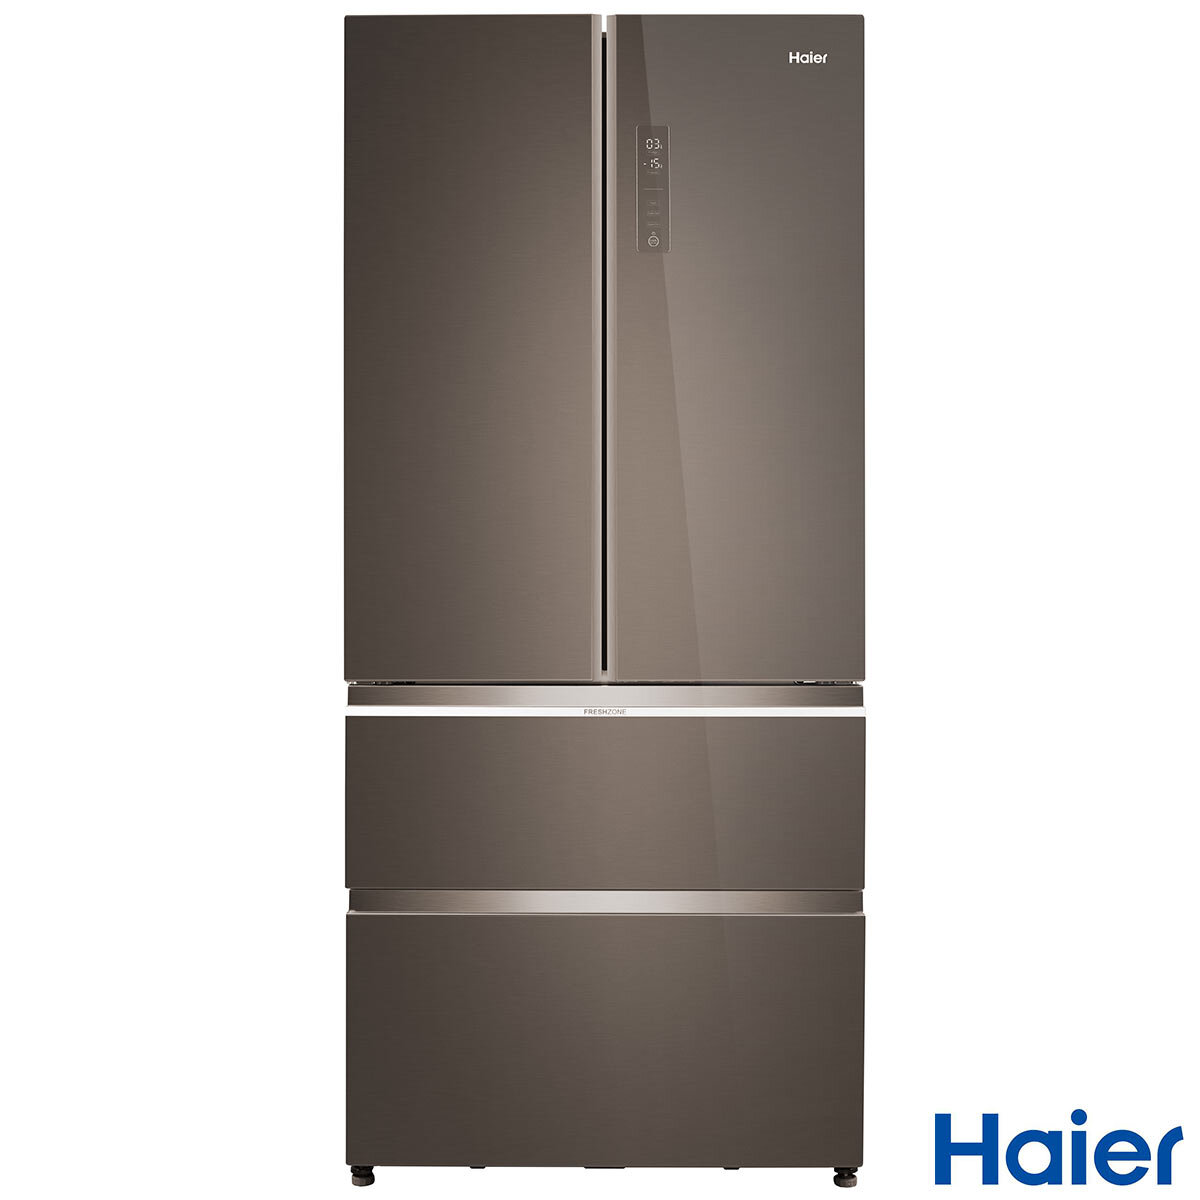 Haier HB18FGSAAA, Multidoor Fridge Freezer, E Rated in Titanium Steel